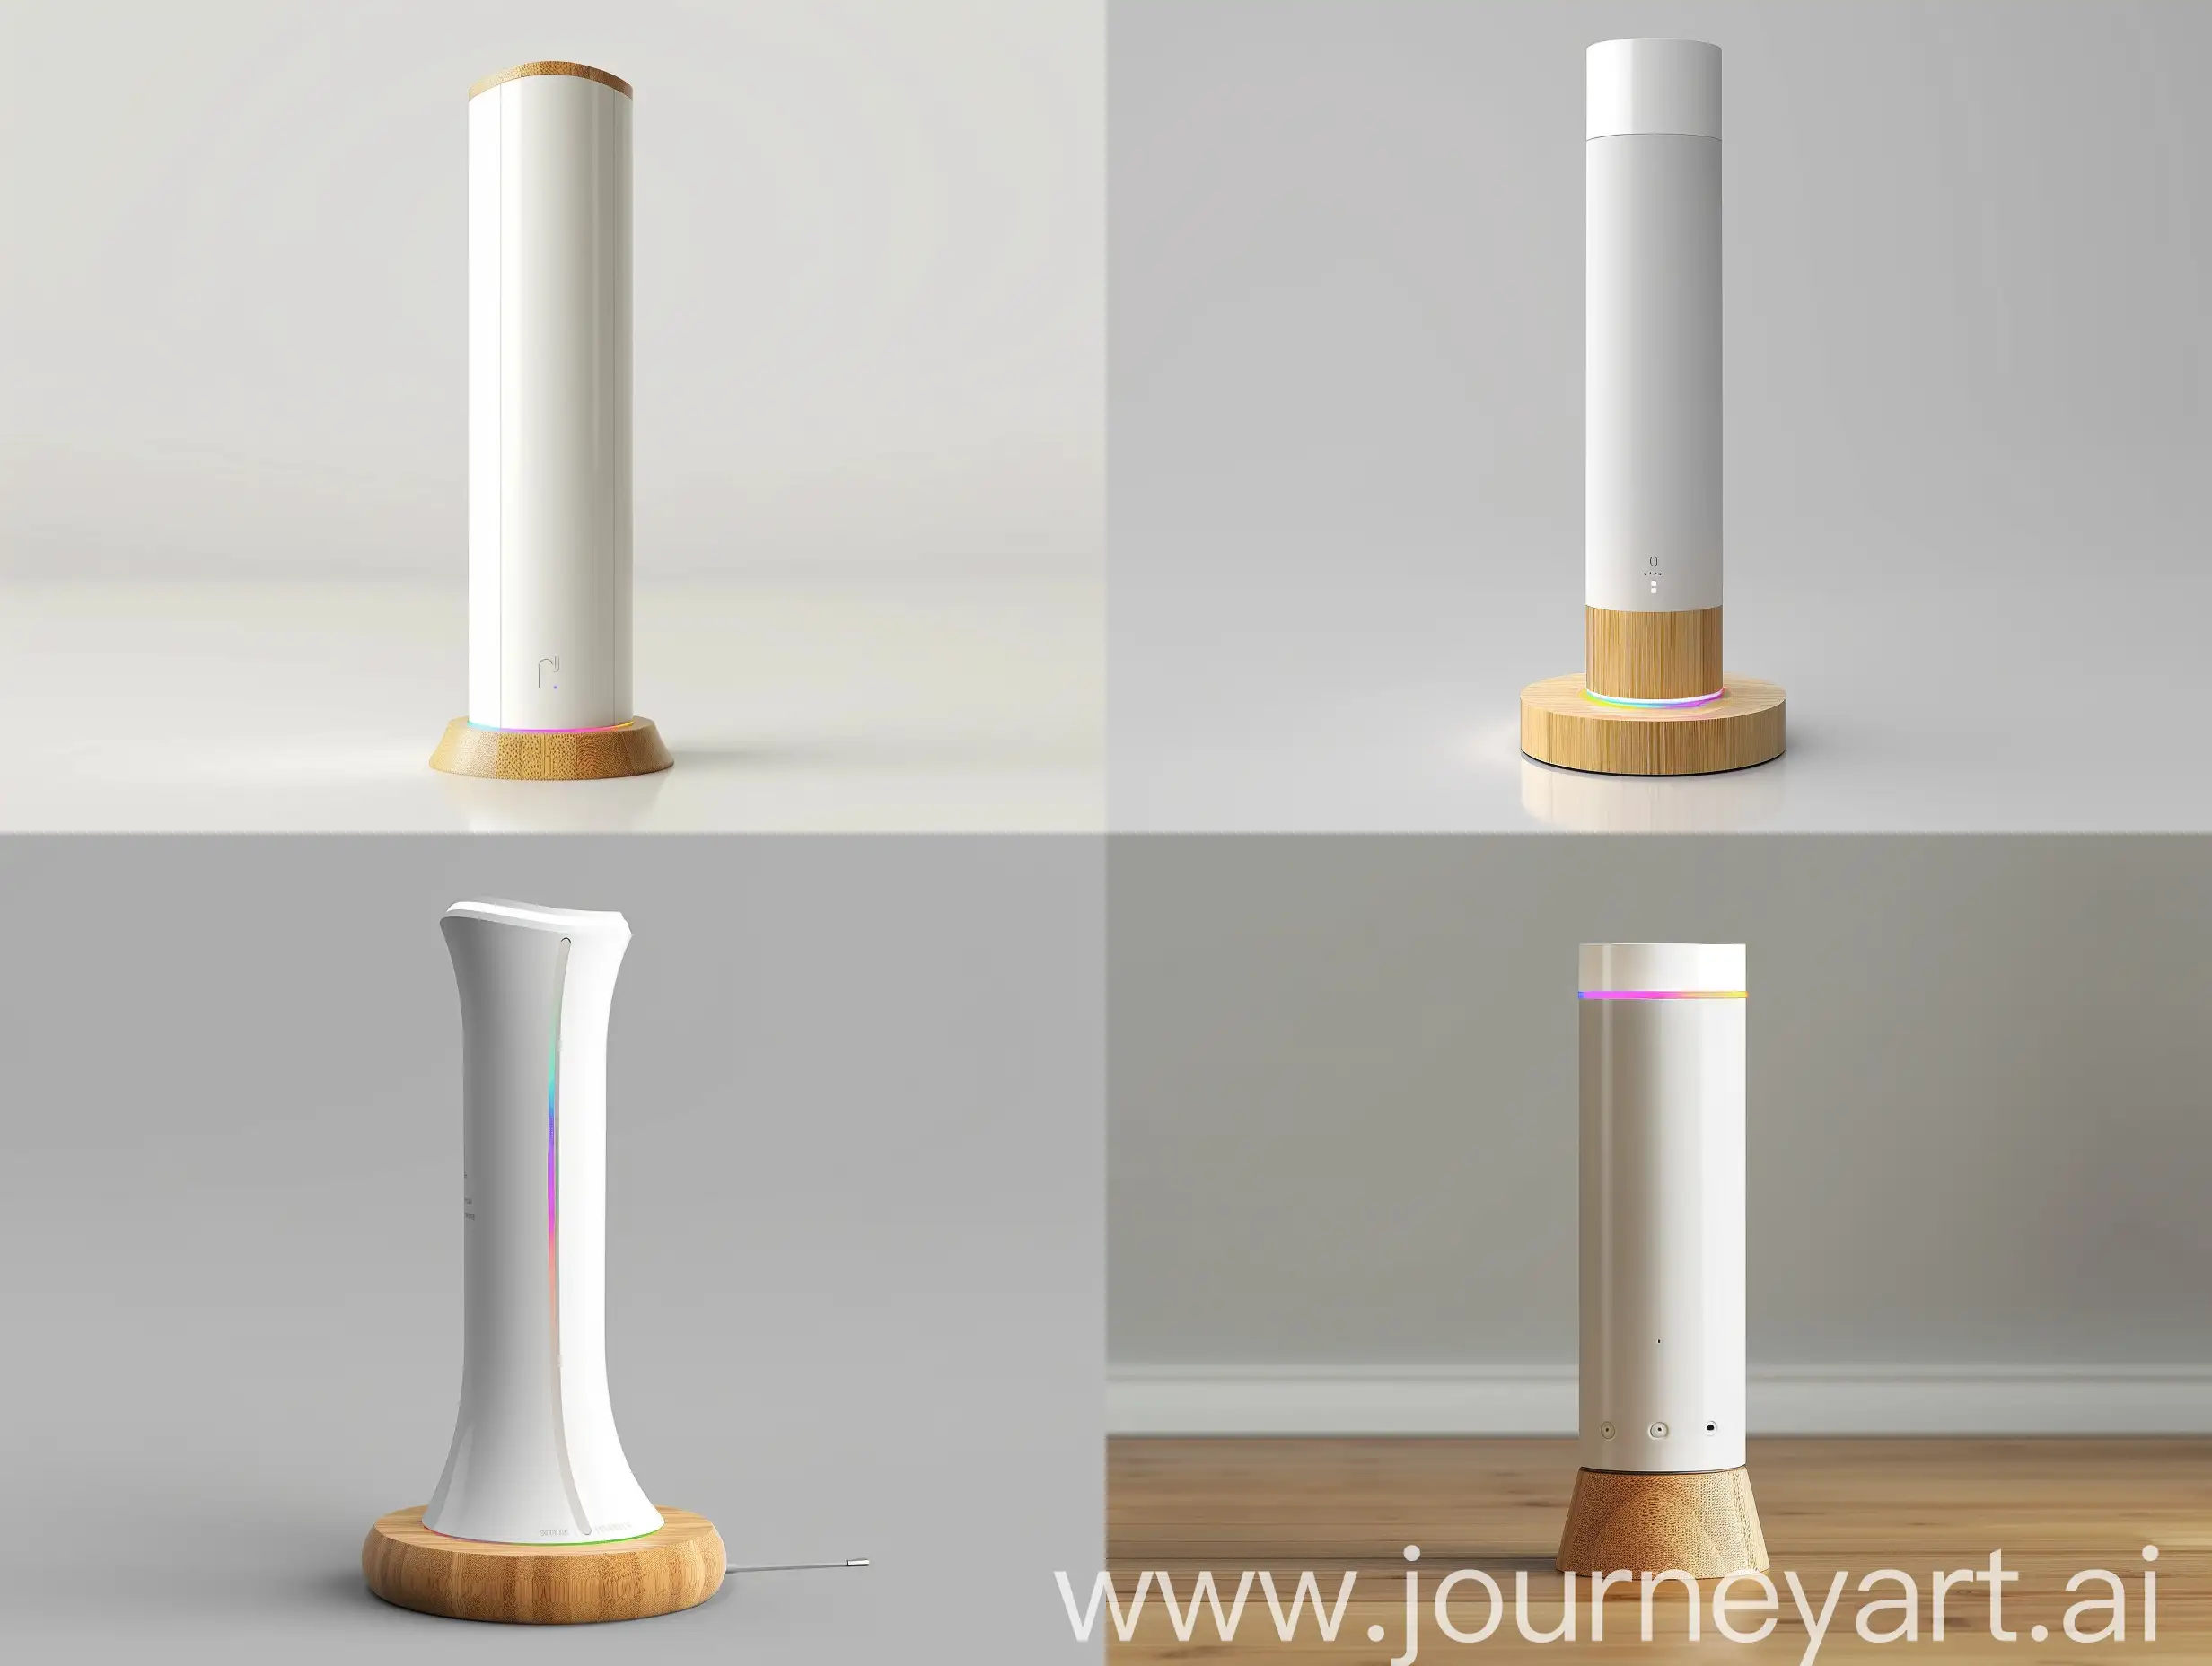 EcoFriendly-Energy-Management-Device-with-Bamboo-Base-and-LED-Lighting